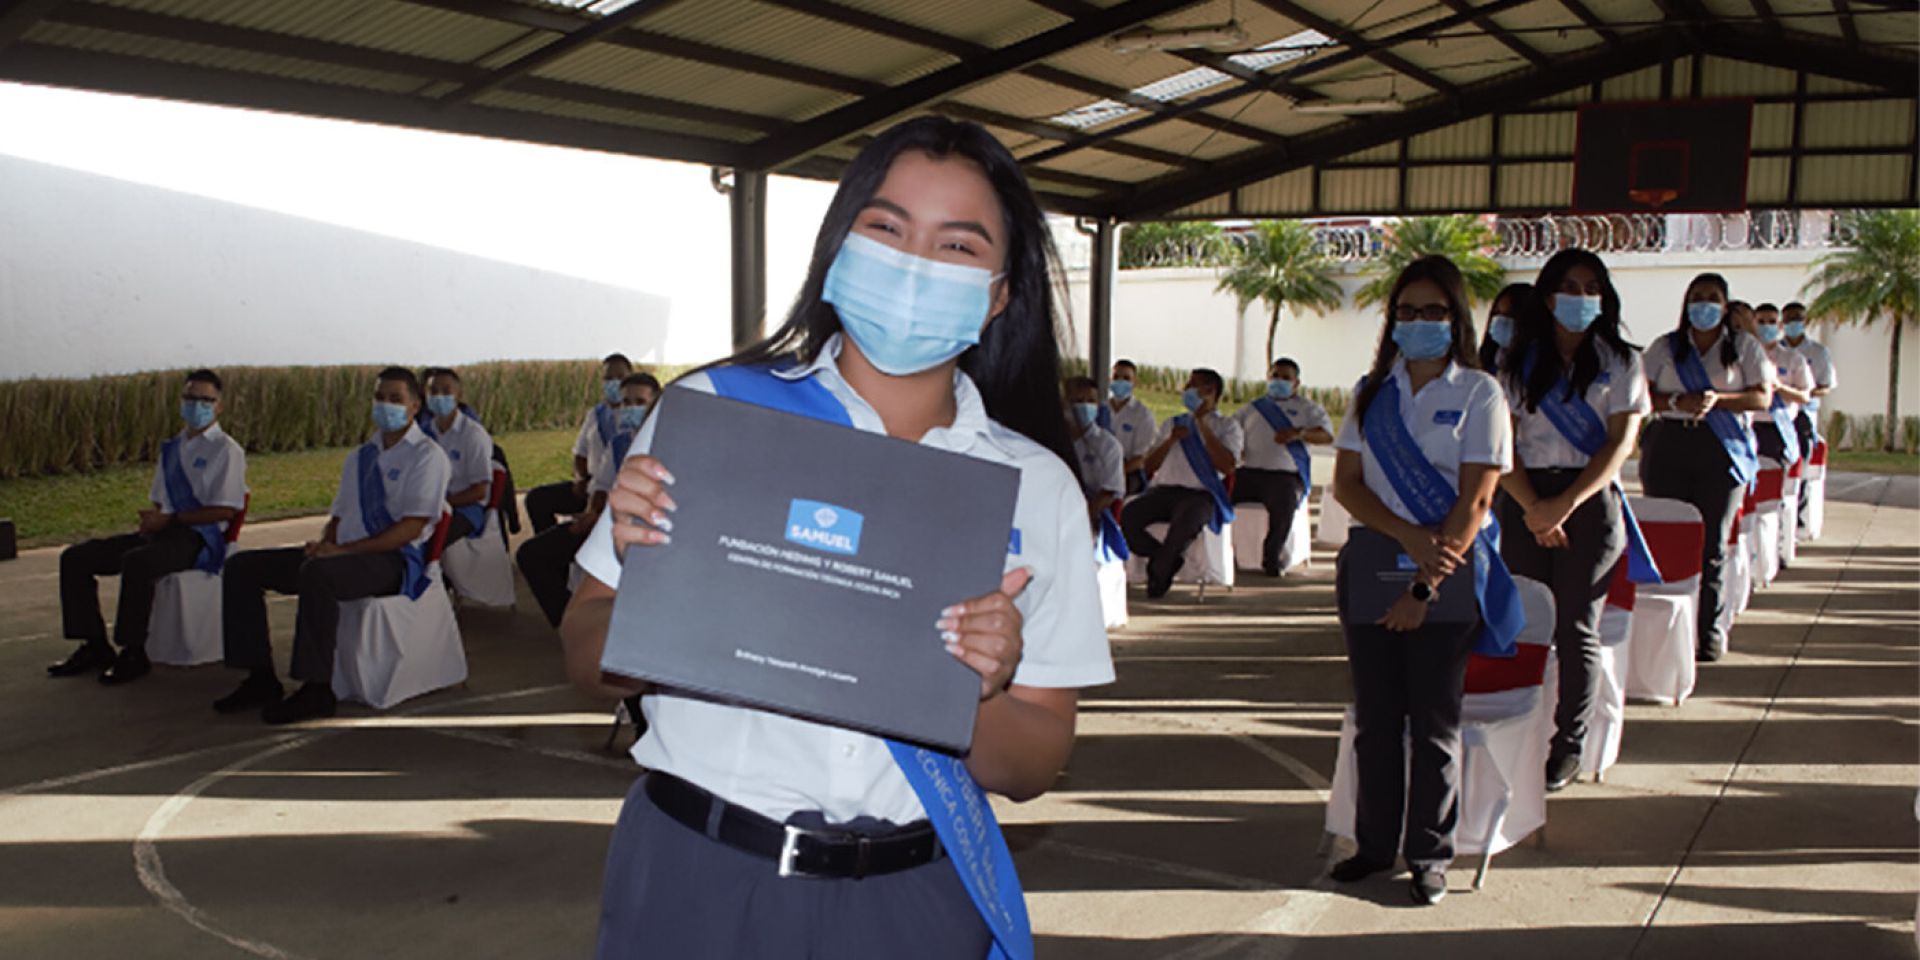 Graduation under pandemic conditions